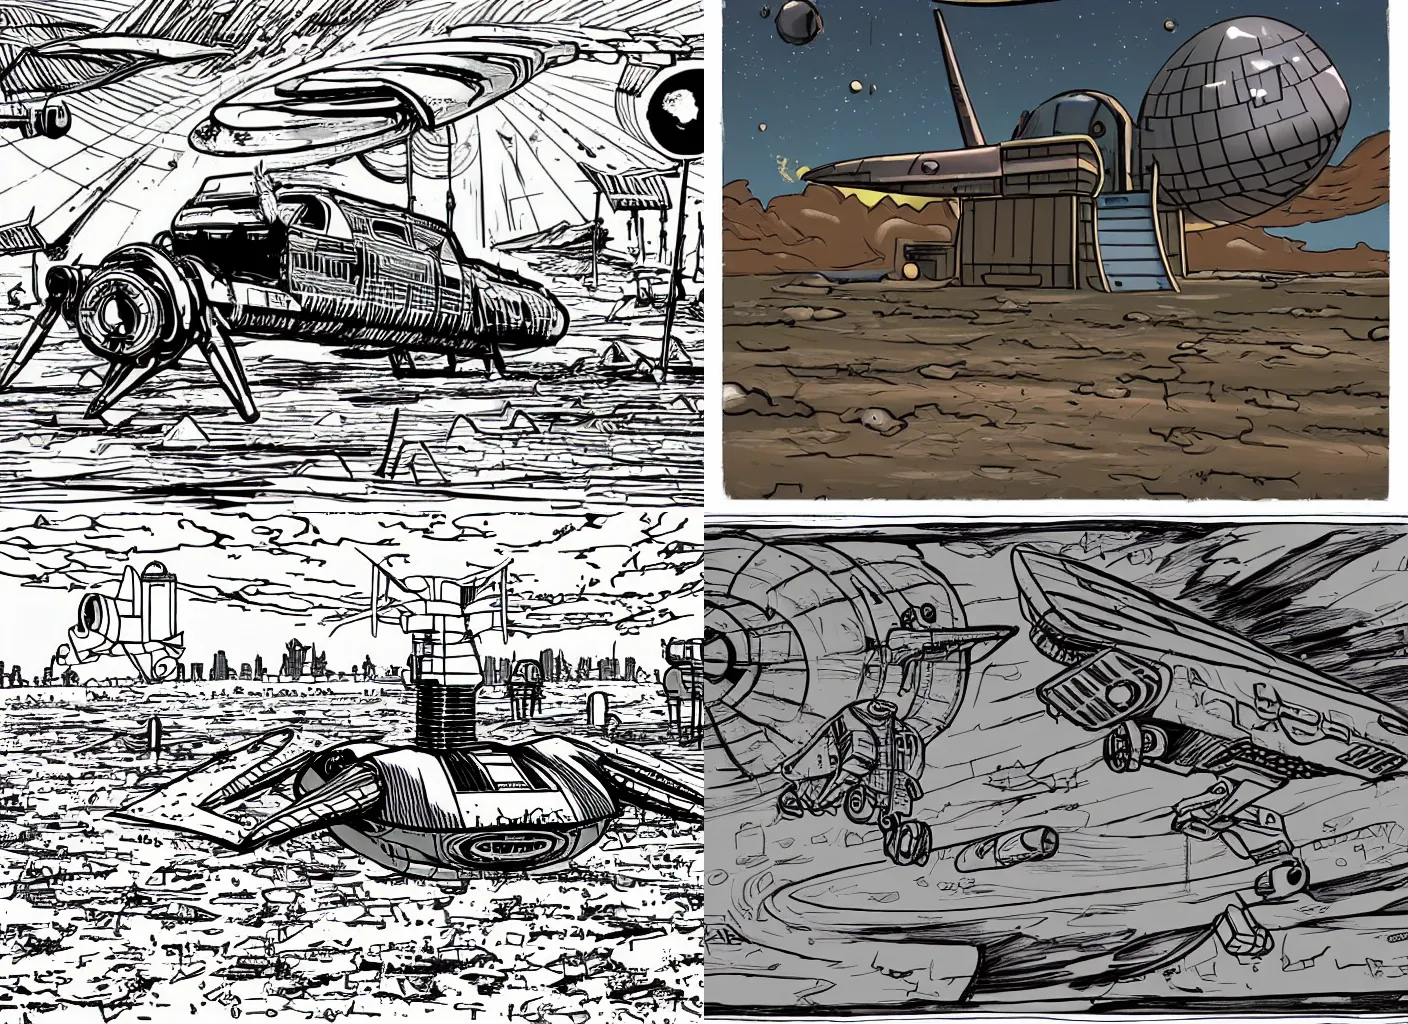 Prompt: cartoon style retro dystopian starship landing on the muddy ground